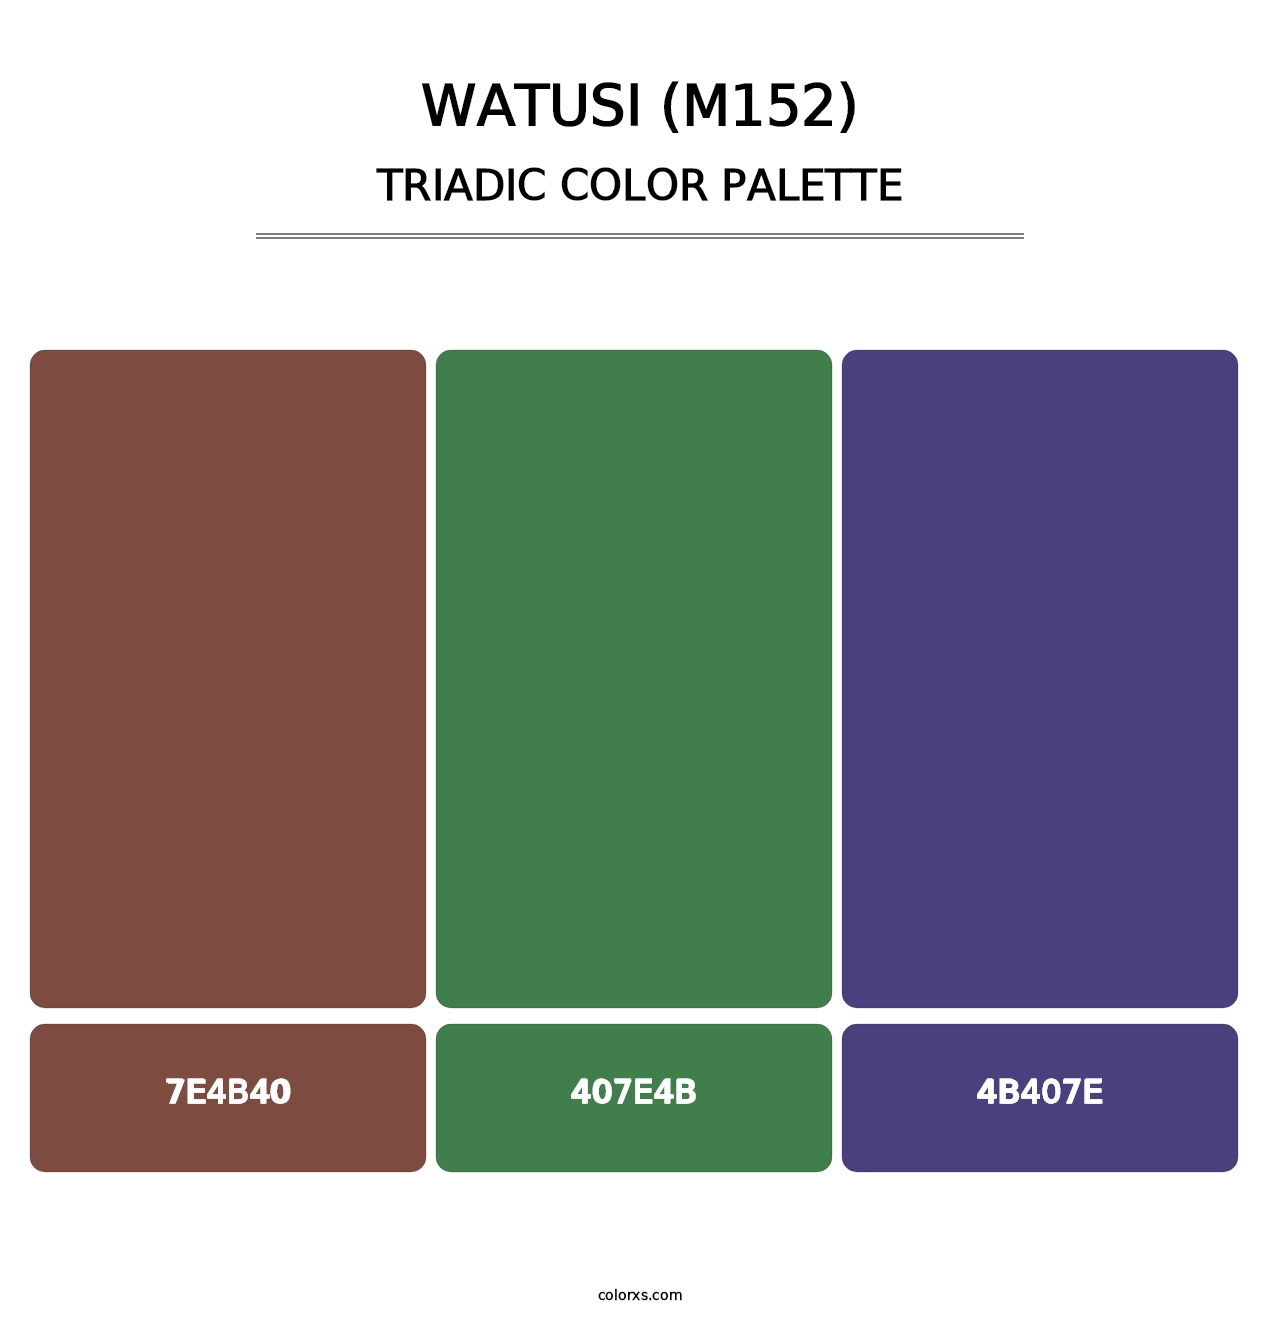 Watusi (M152) - Triadic Color Palette